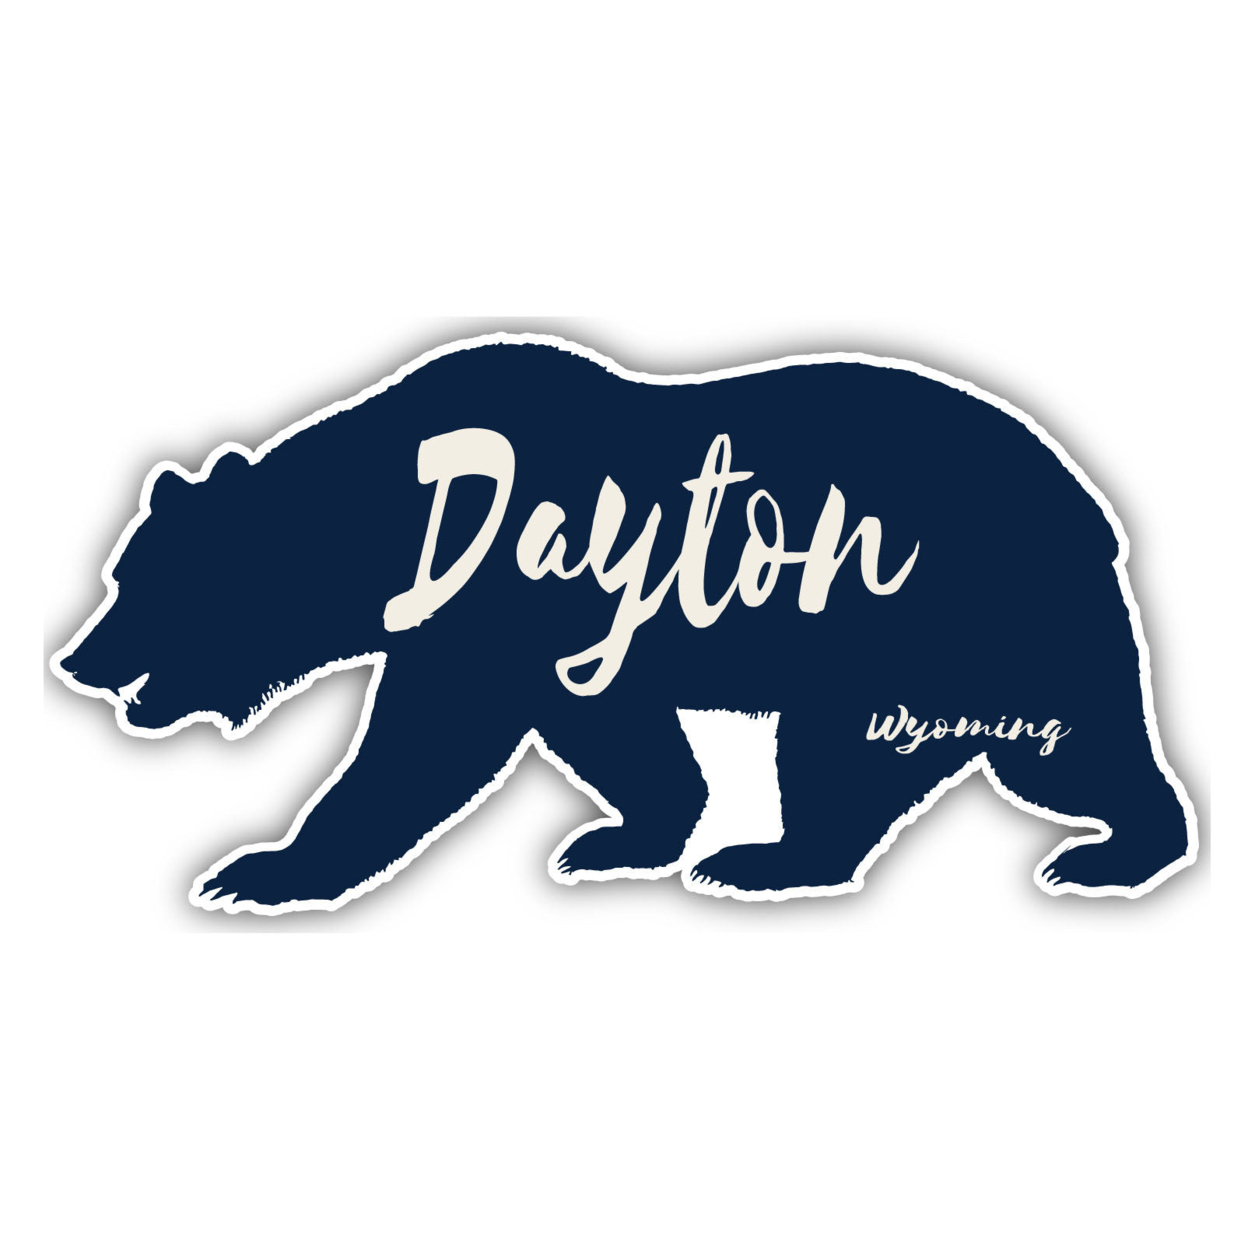 Dayton Wyoming Souvenir Decorative Stickers (Choose Theme And Size) - Single Unit, 2-Inch, Bear